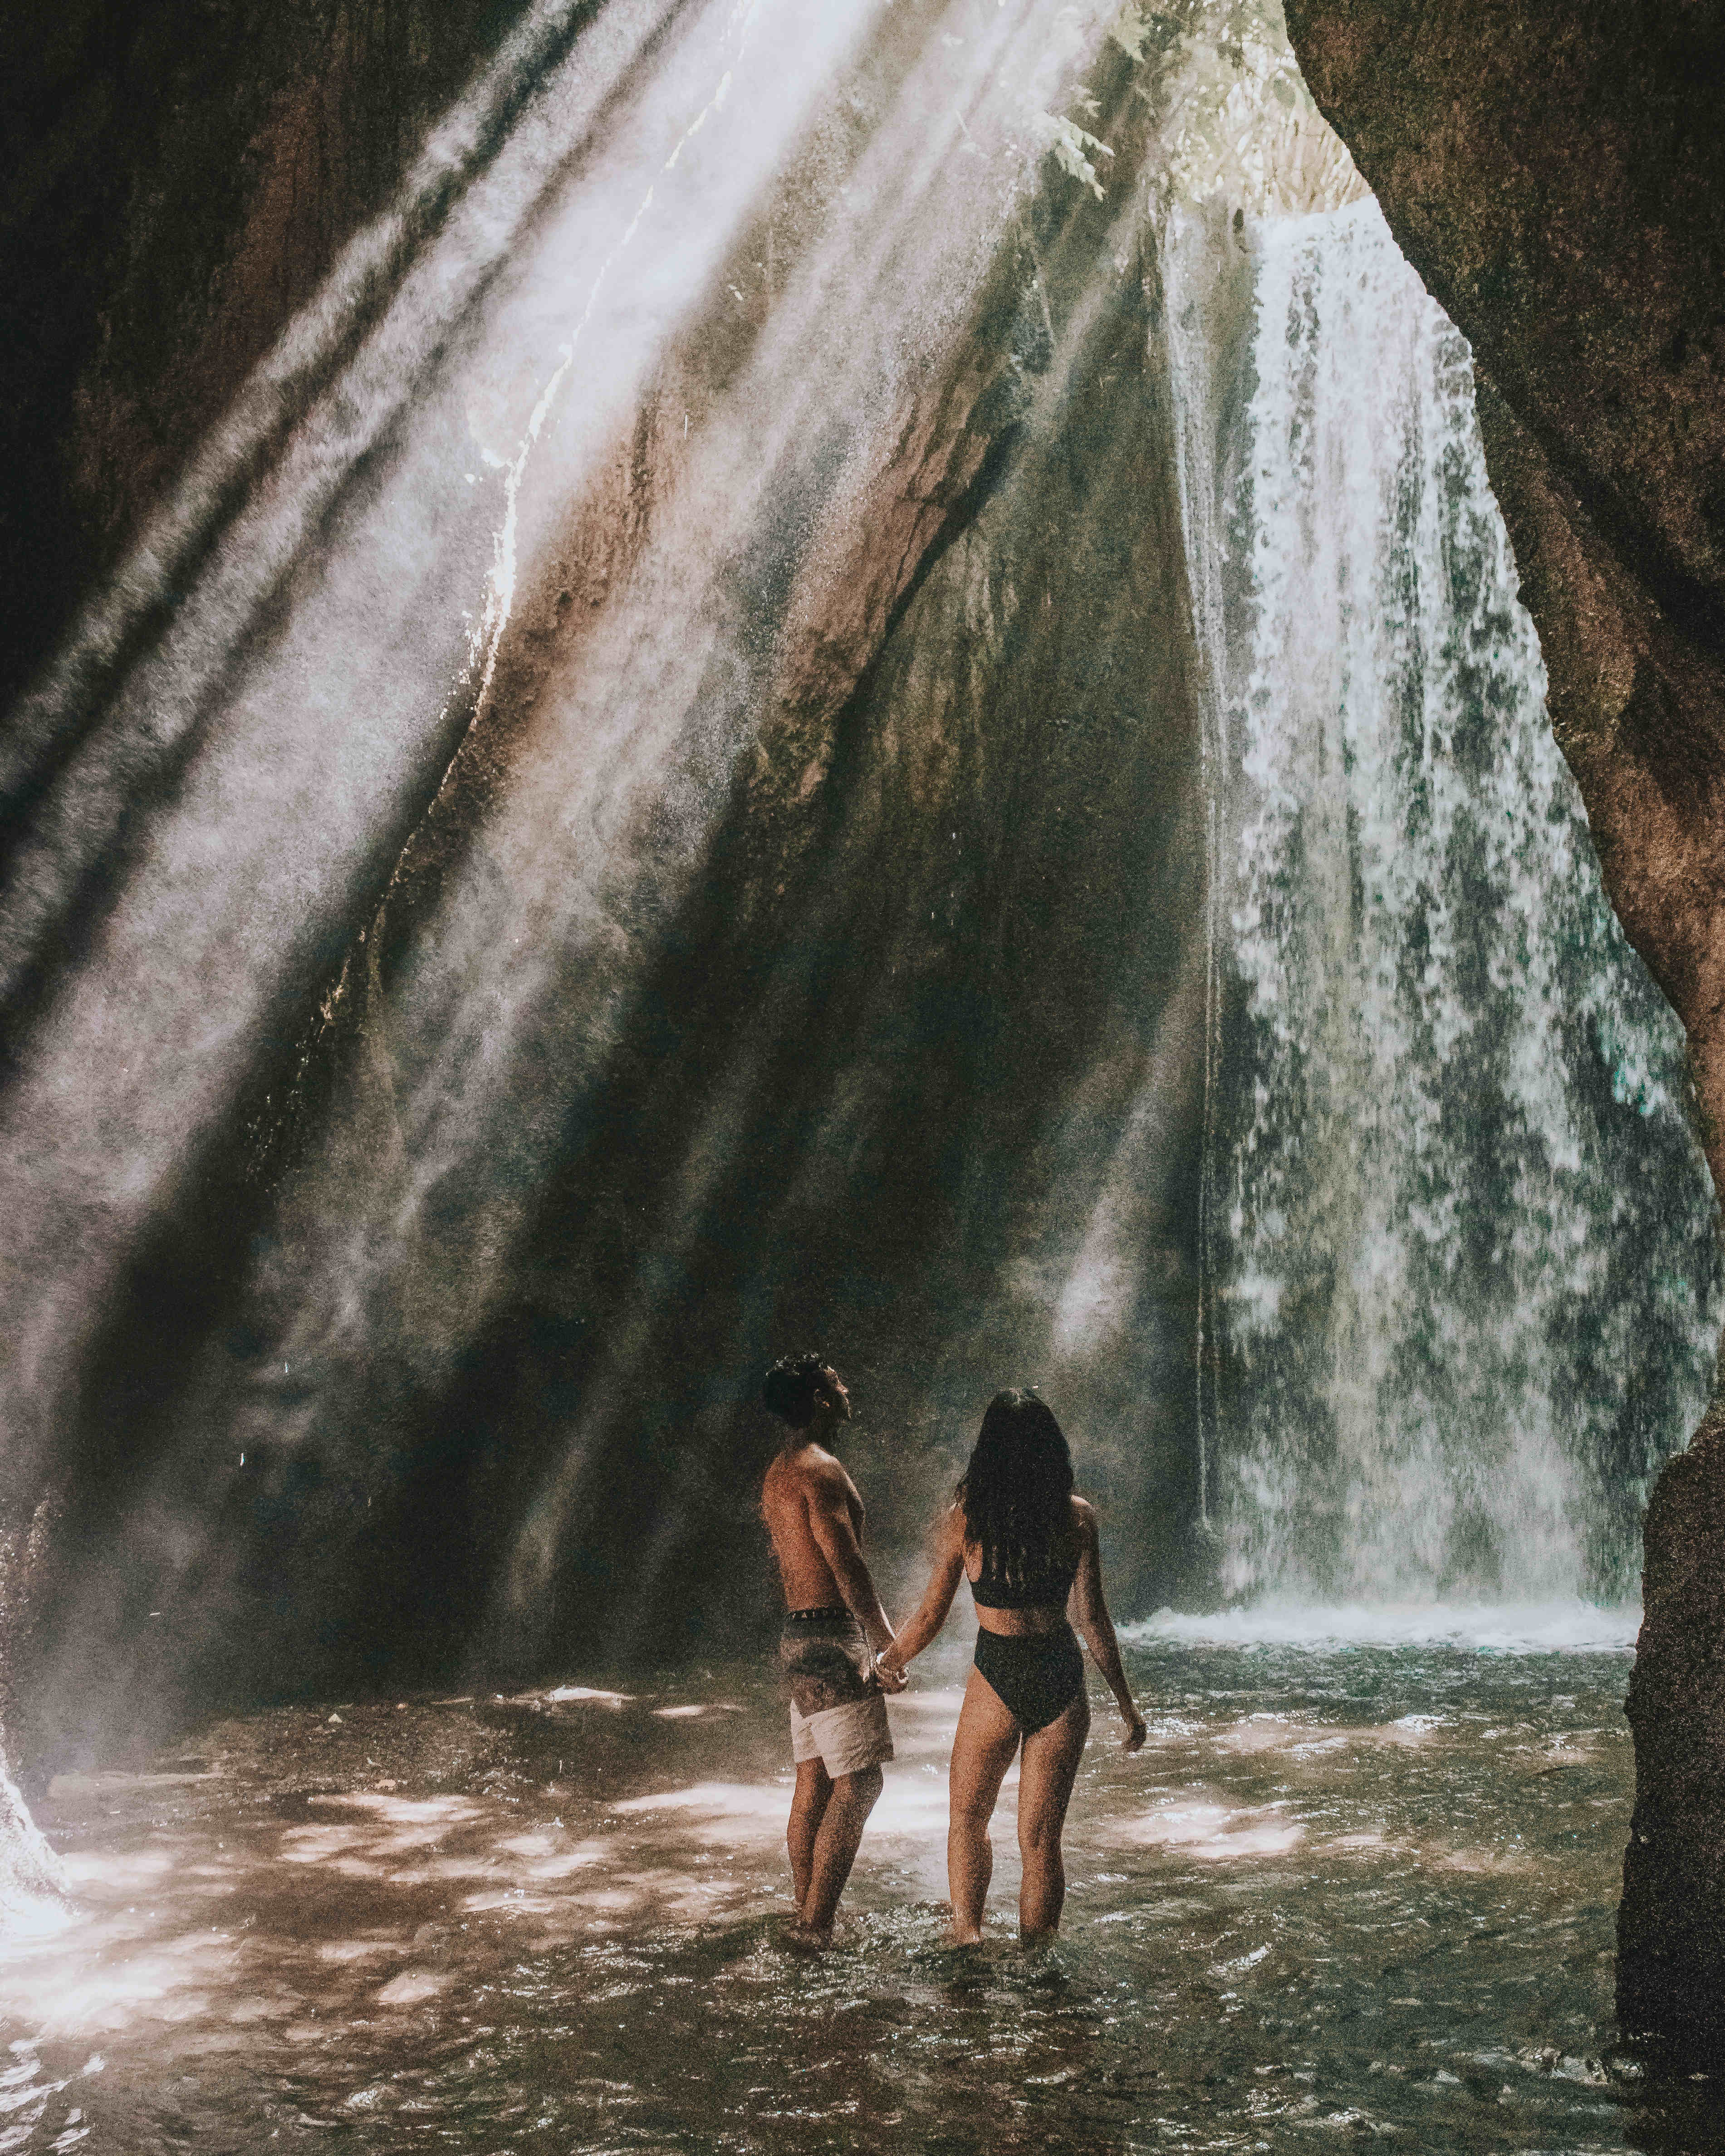 Tukad cepung waterfall in bali guide